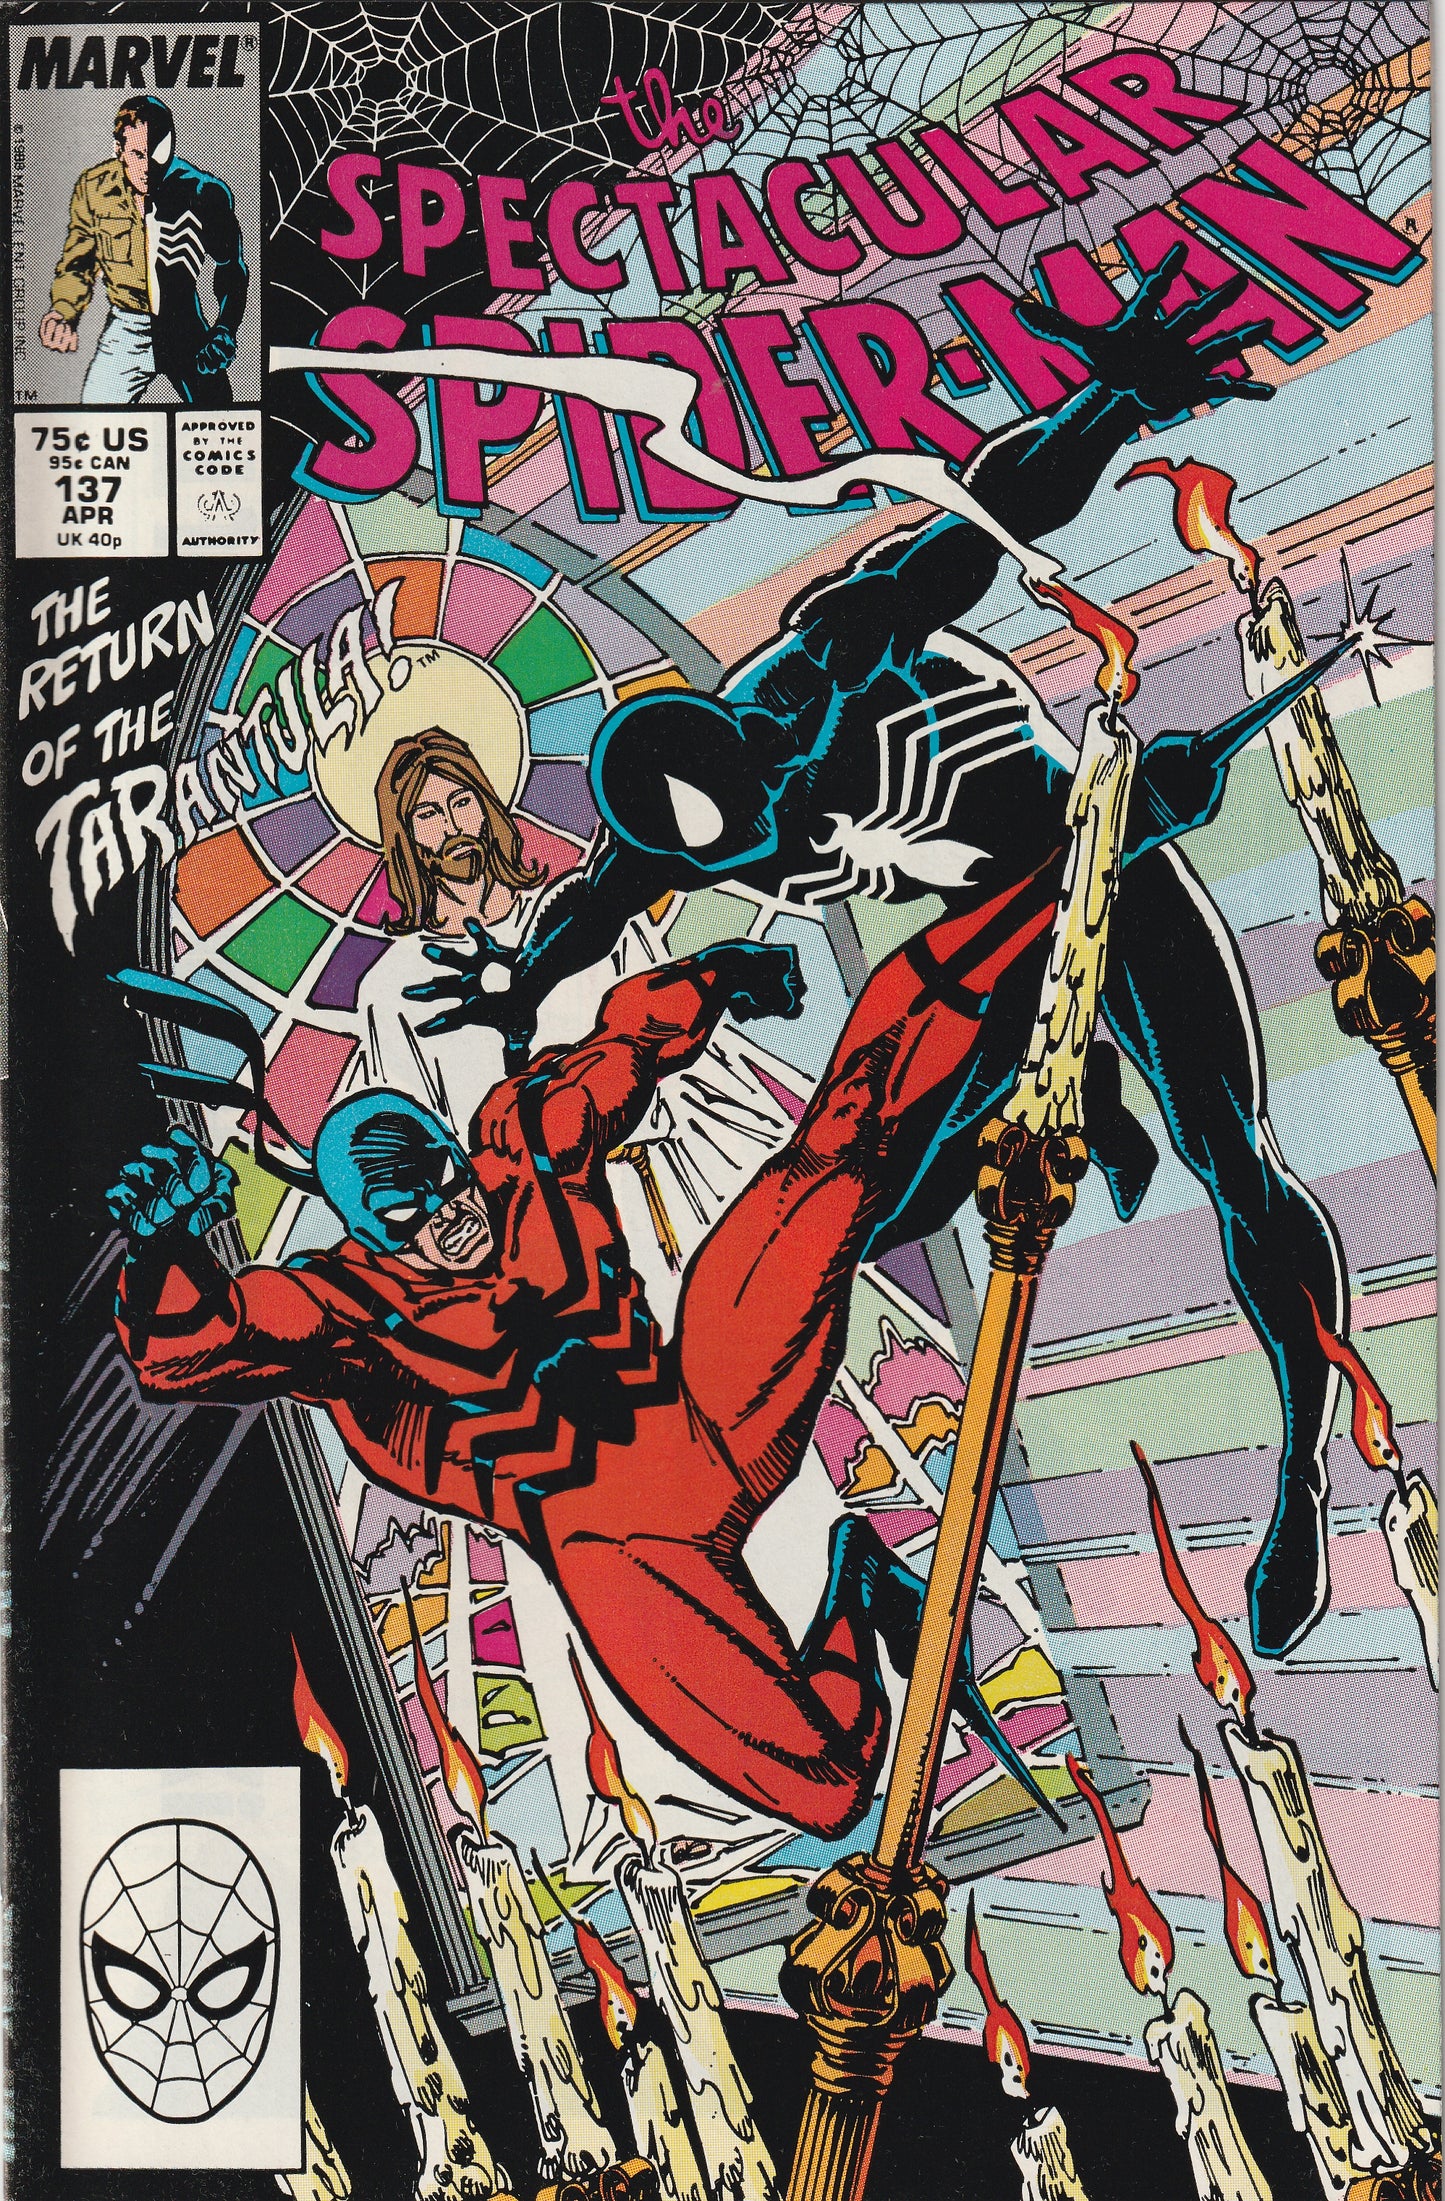 Spectacular Spider-Man #137 (1988) - Return of the Tarantula, Black costume